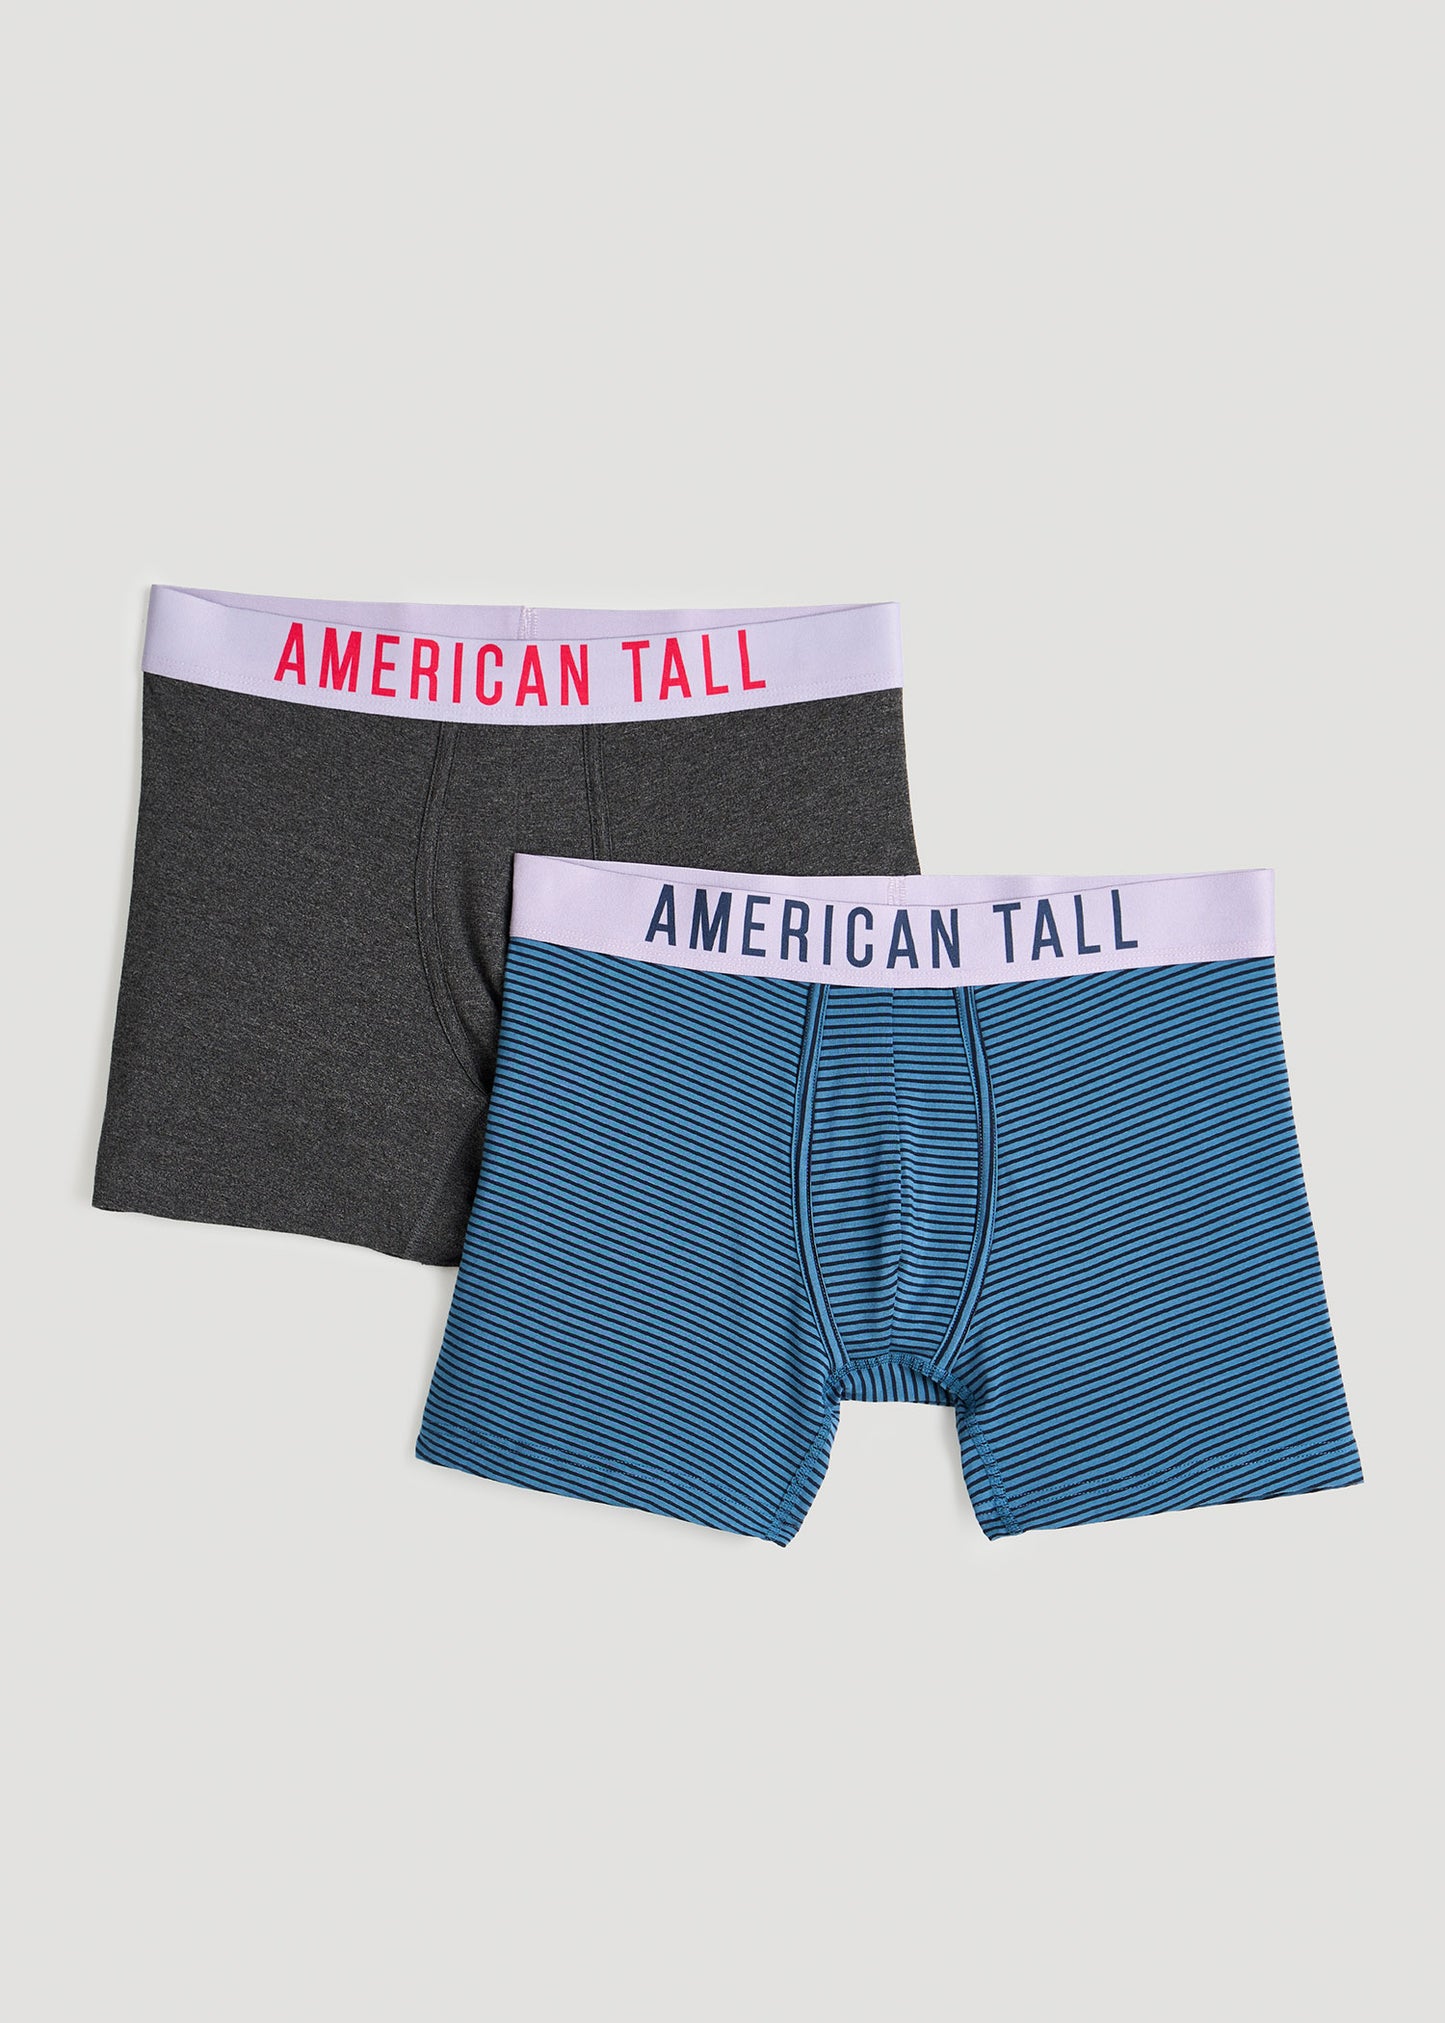 Buy a American Eagle Mens 1-Pack Underwear Boxer Briefs